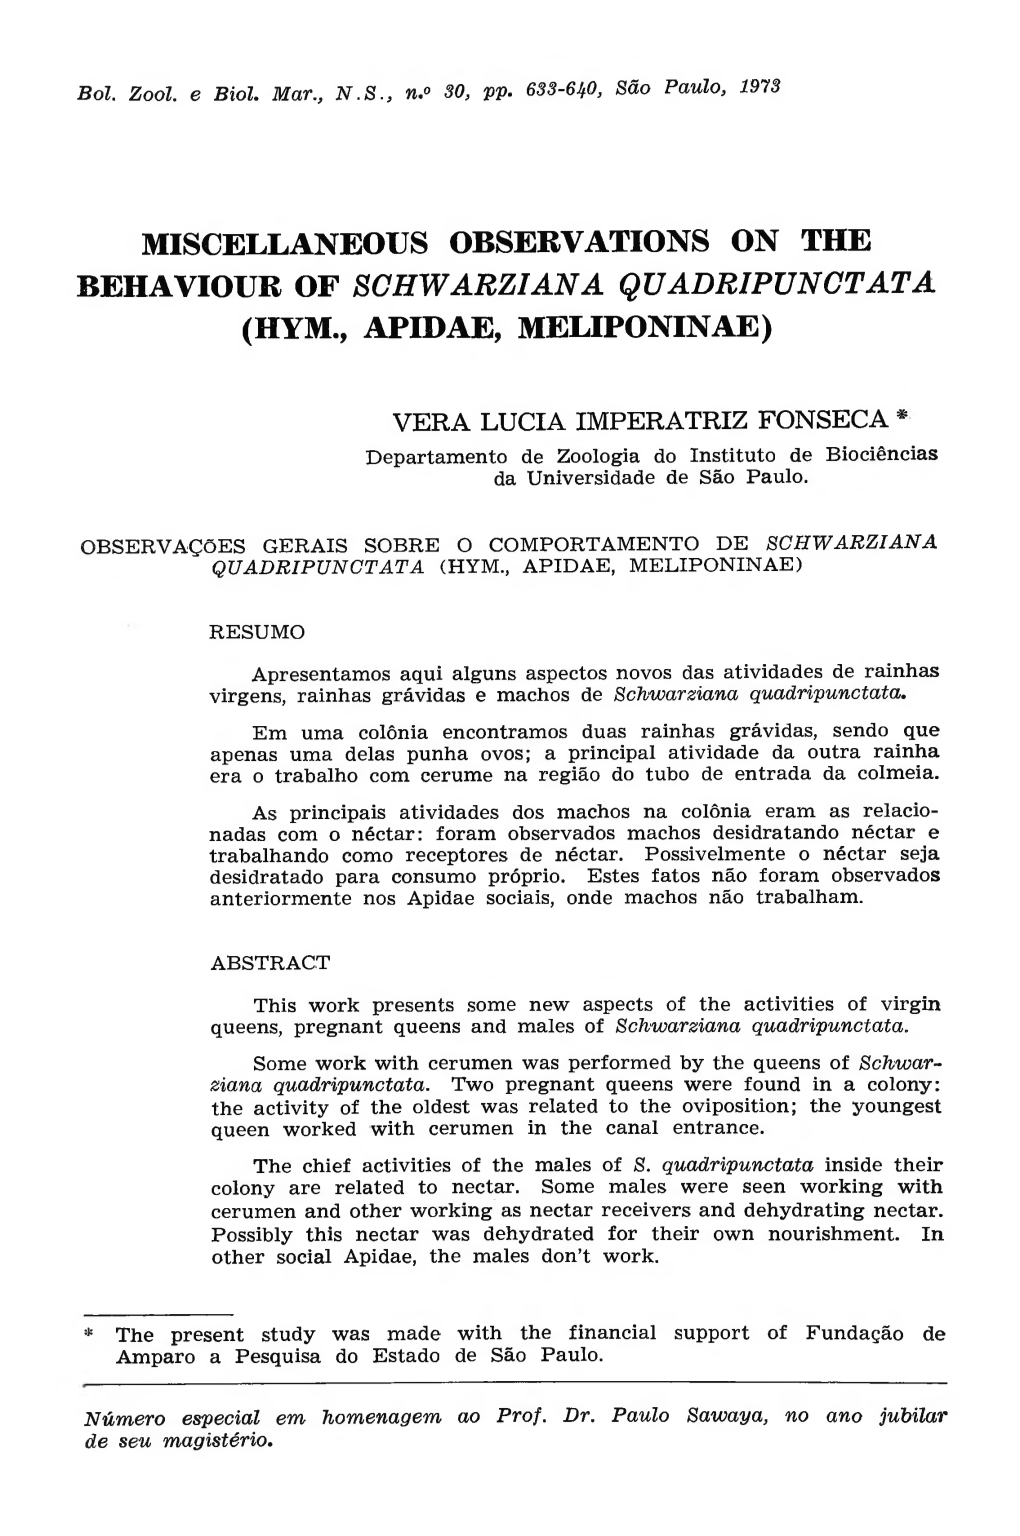 Miscellaneous Observations on the Behaviour of Schwarziana Quadripunctata (Hym., Apidae, Meliponinae)